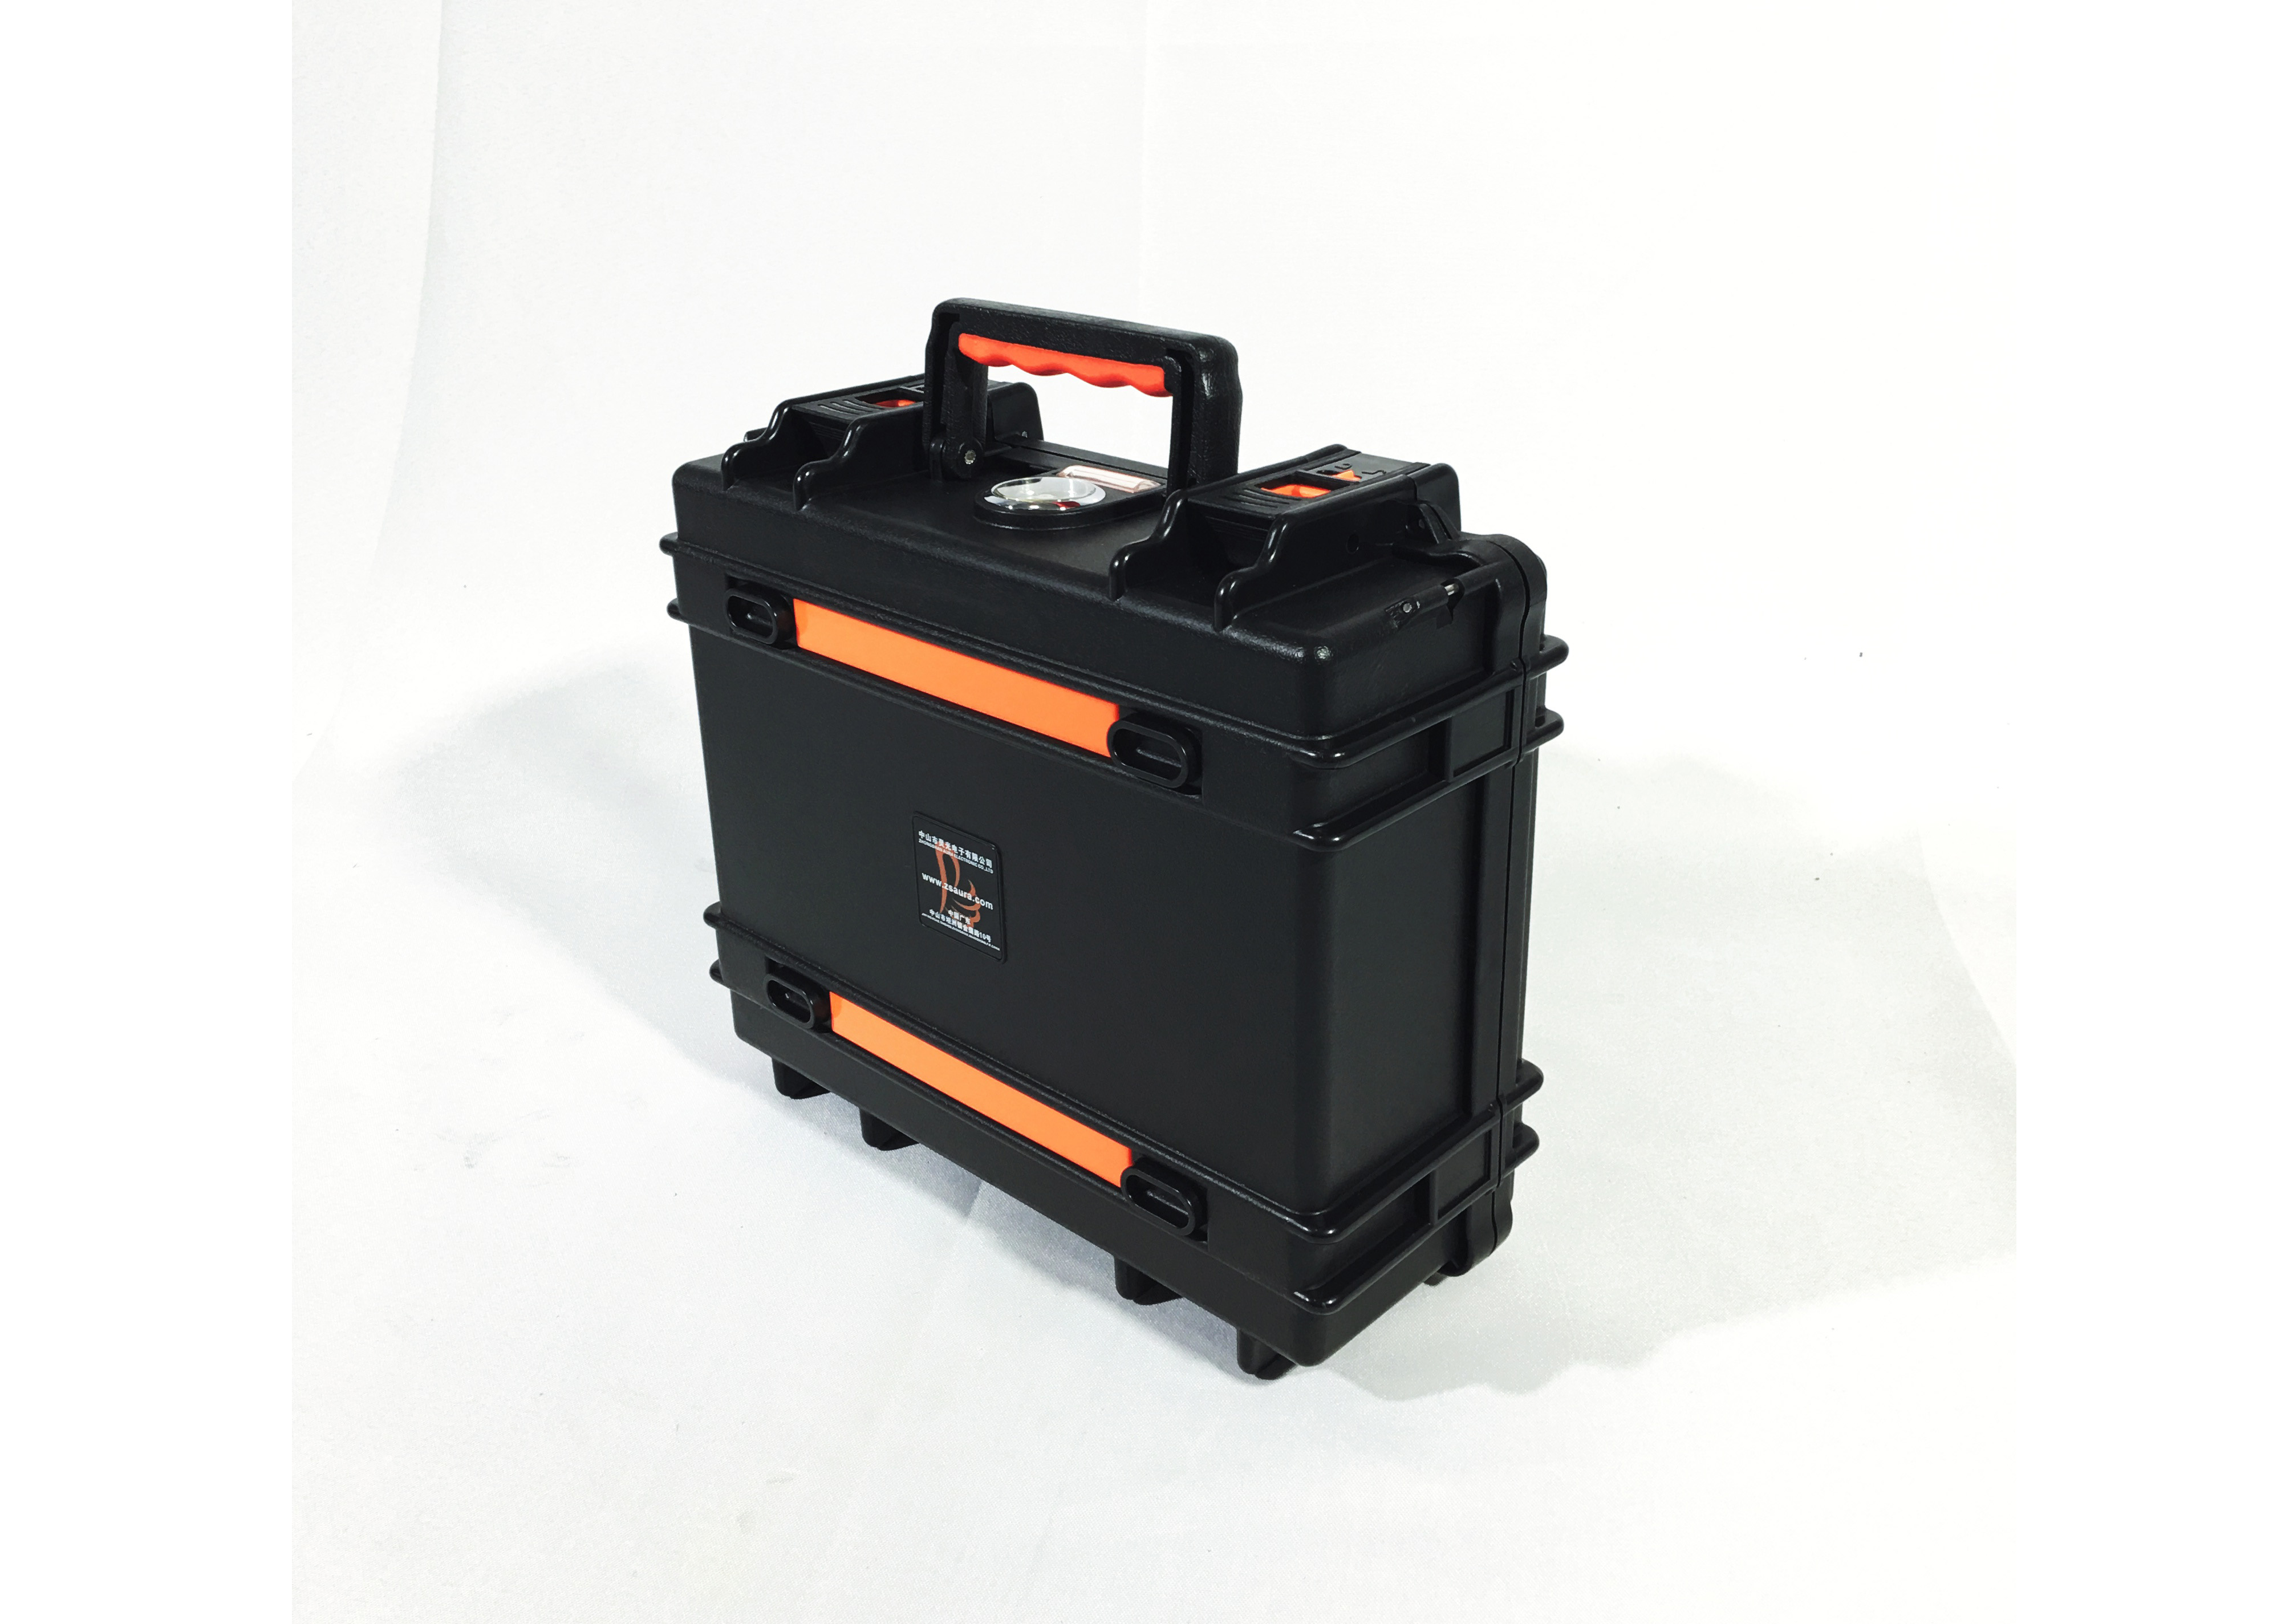 AI-2.8-2208灵光安全防护箱仪器仪表箱防水箱摄影器材箱工具箱